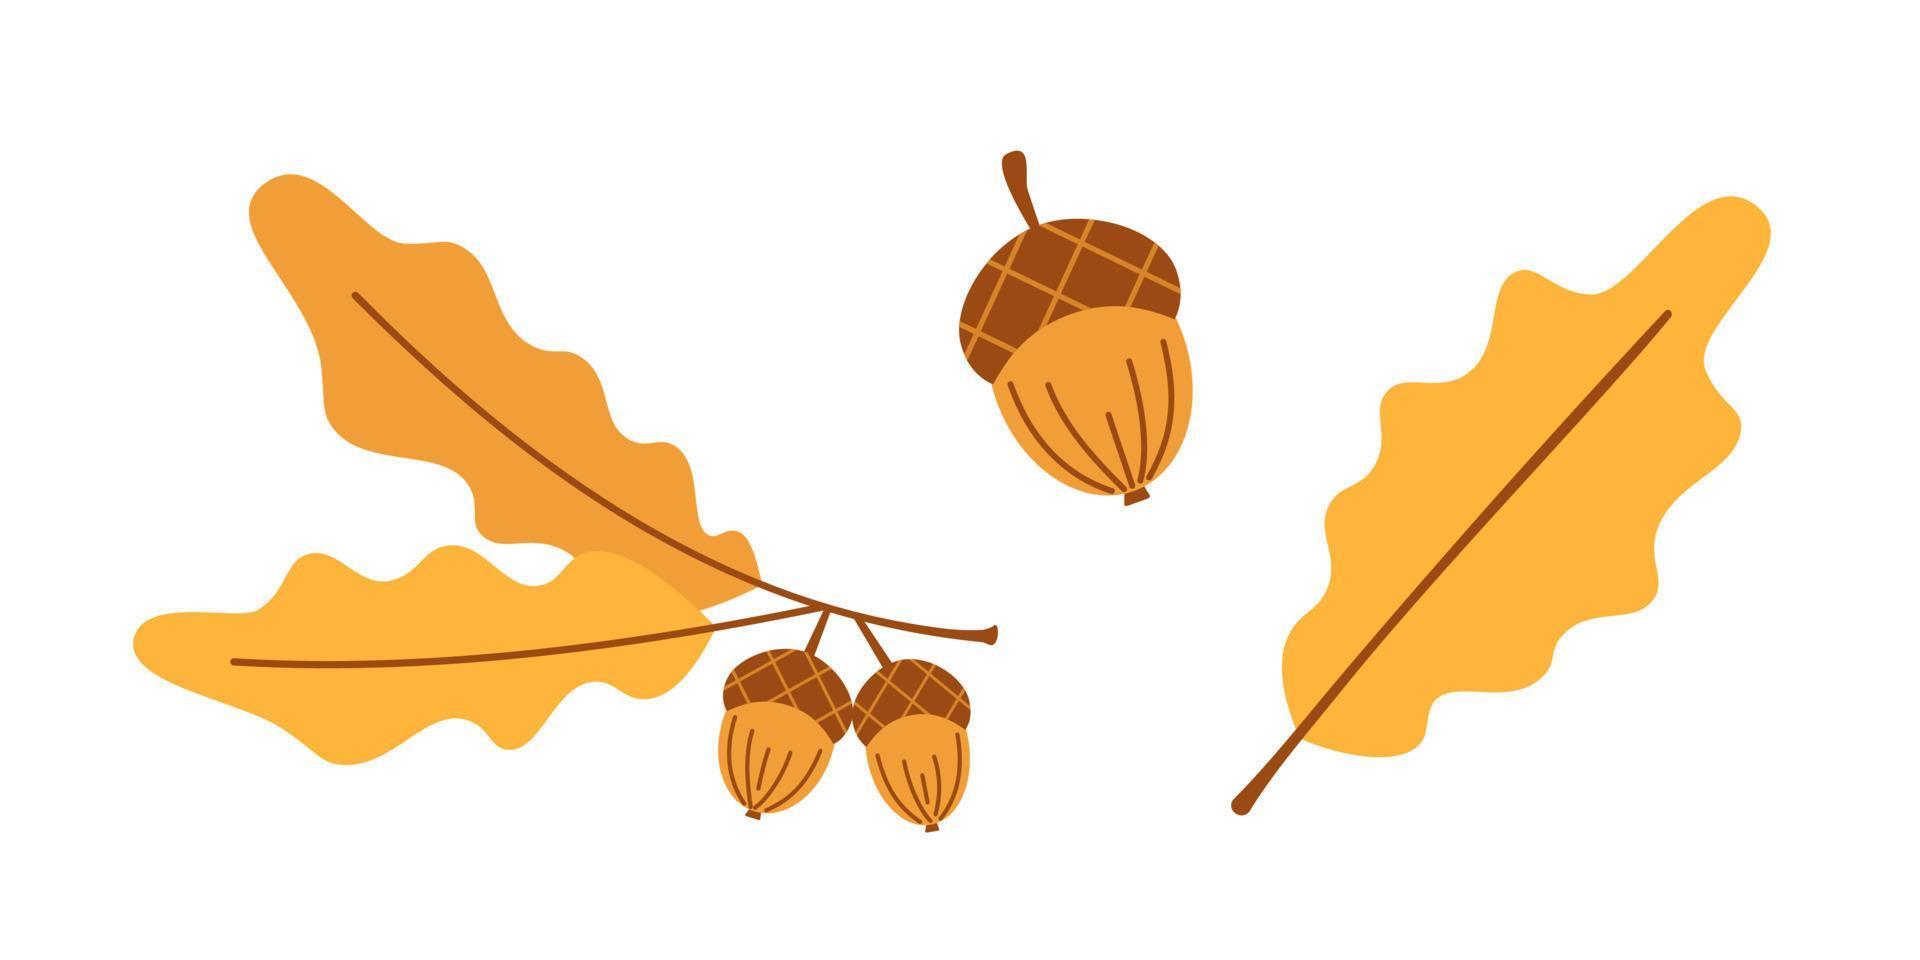 vector herfst reeks met geel eik bladeren en eikels. eik tak, blad en eikel. schattig herfst verzameling. val.